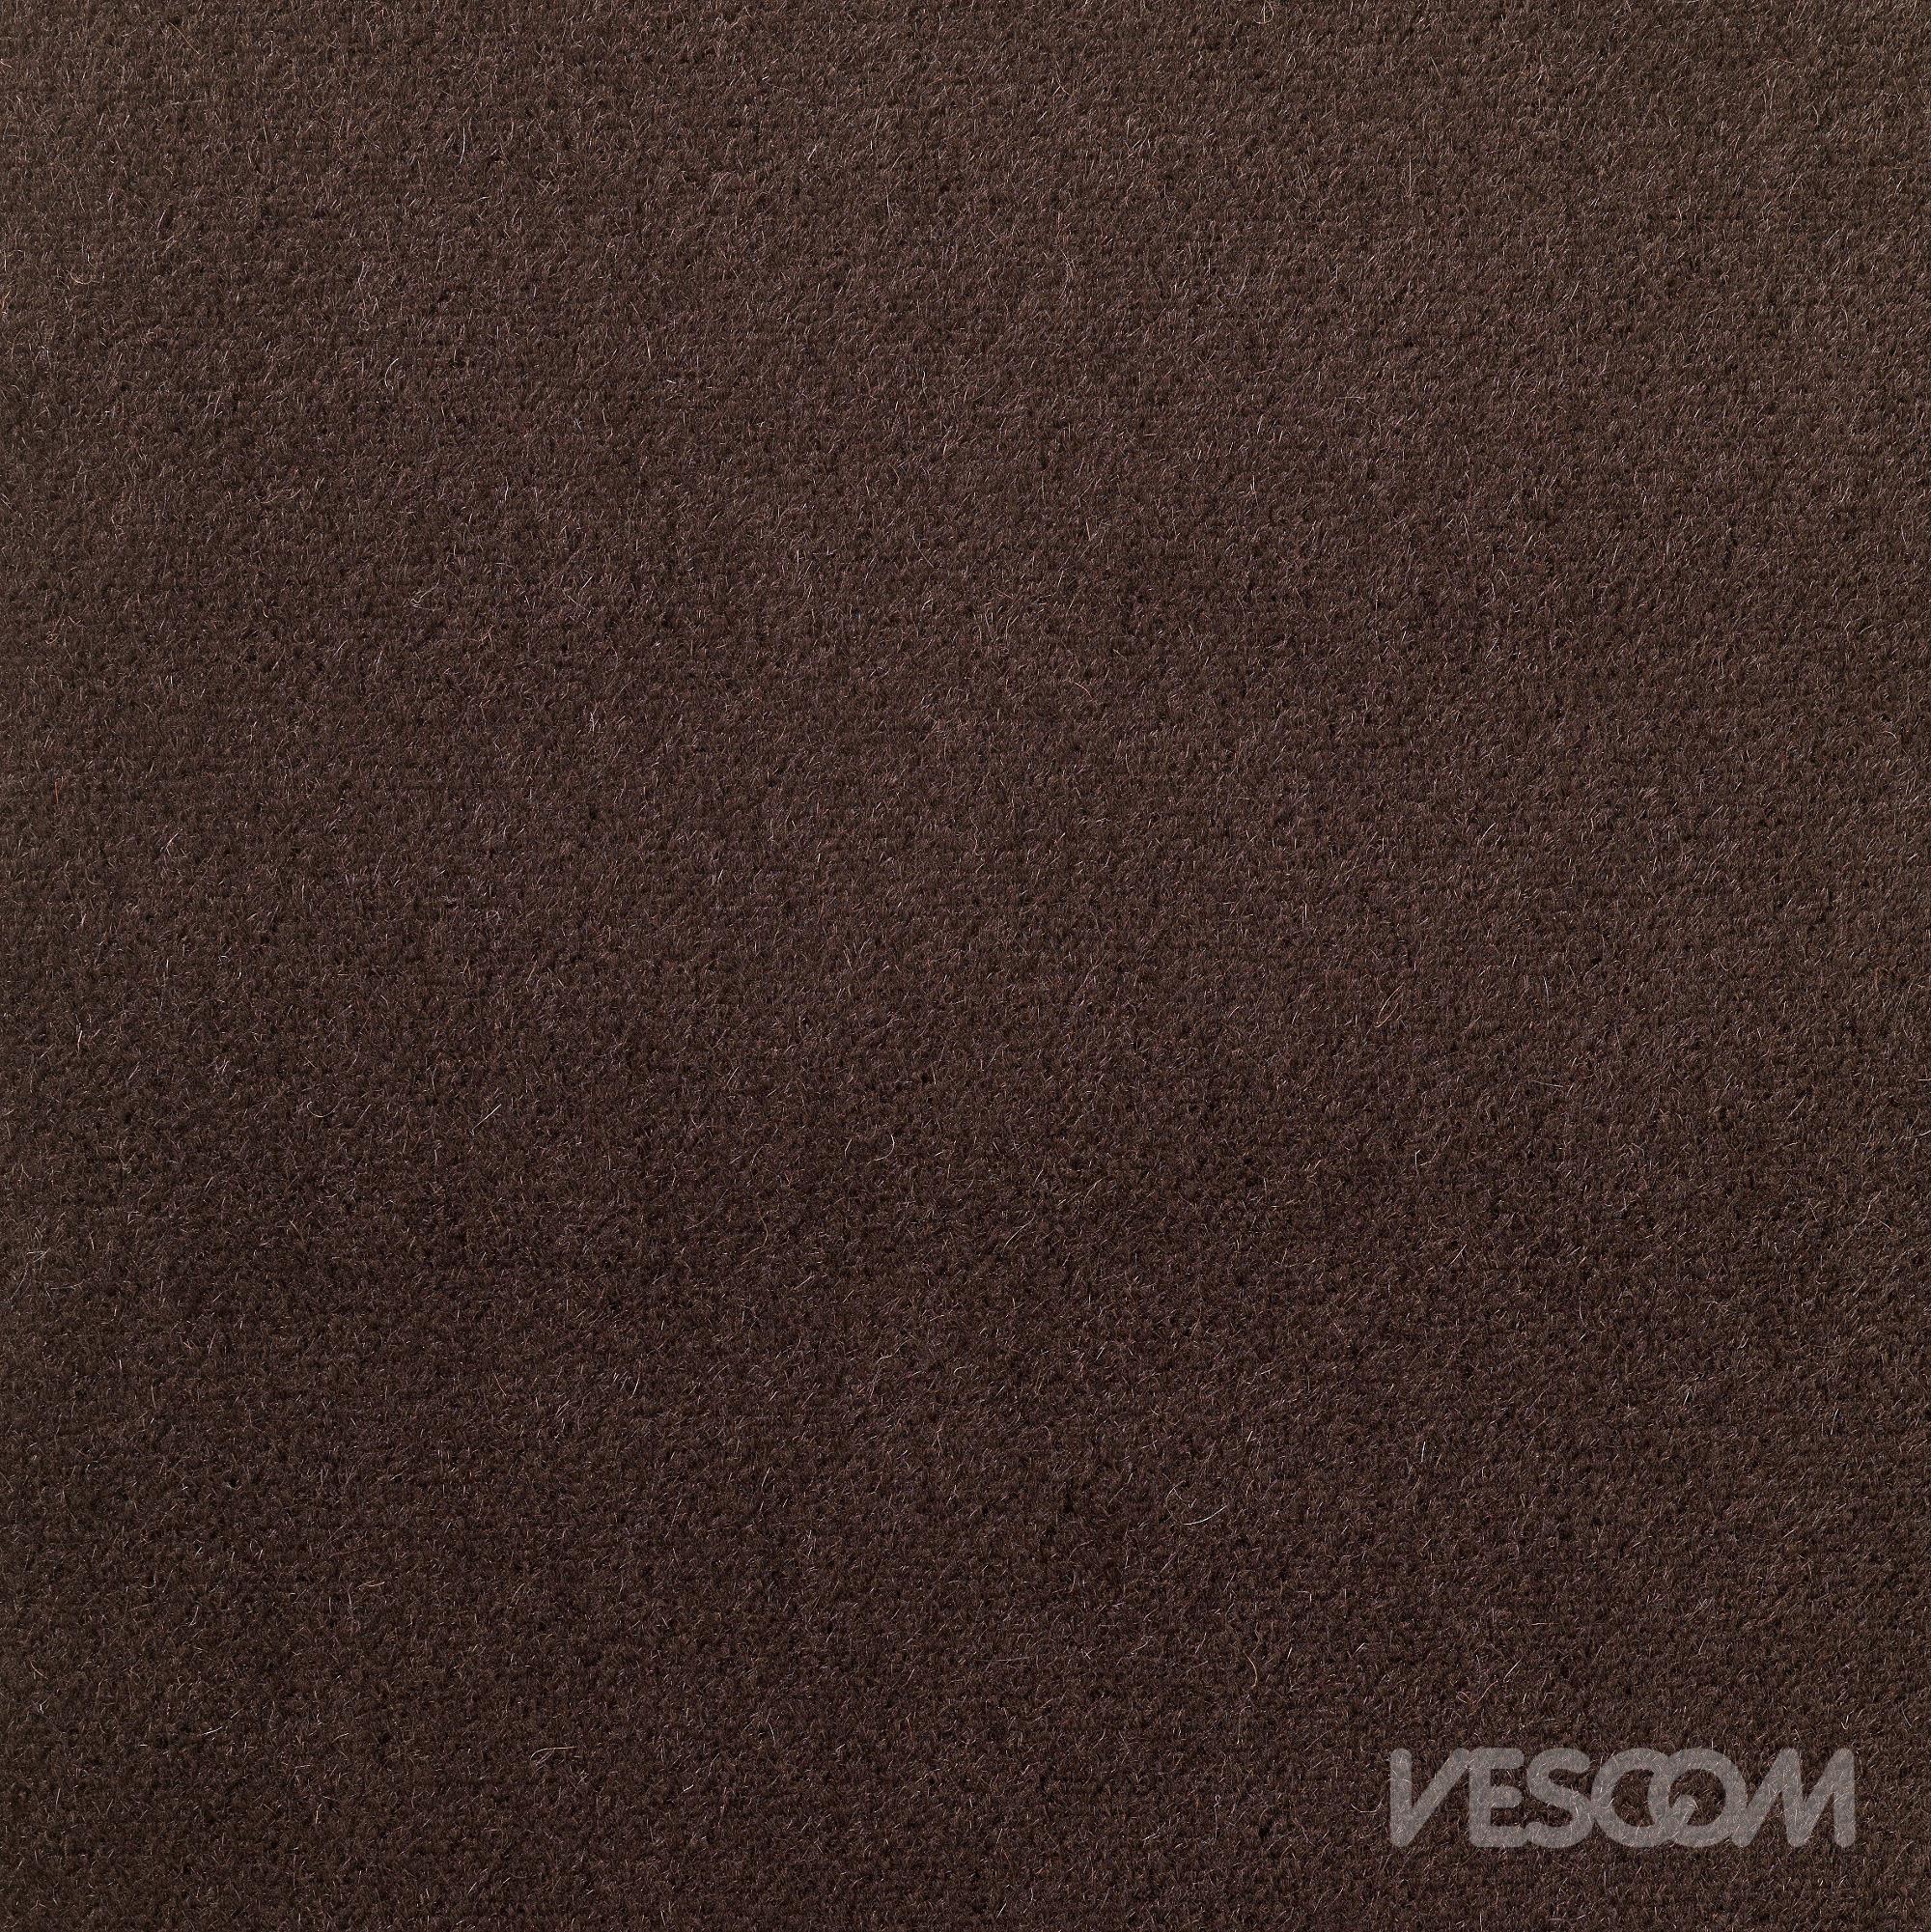 Vescom Ariana Upholstery Fabric 7061.26 